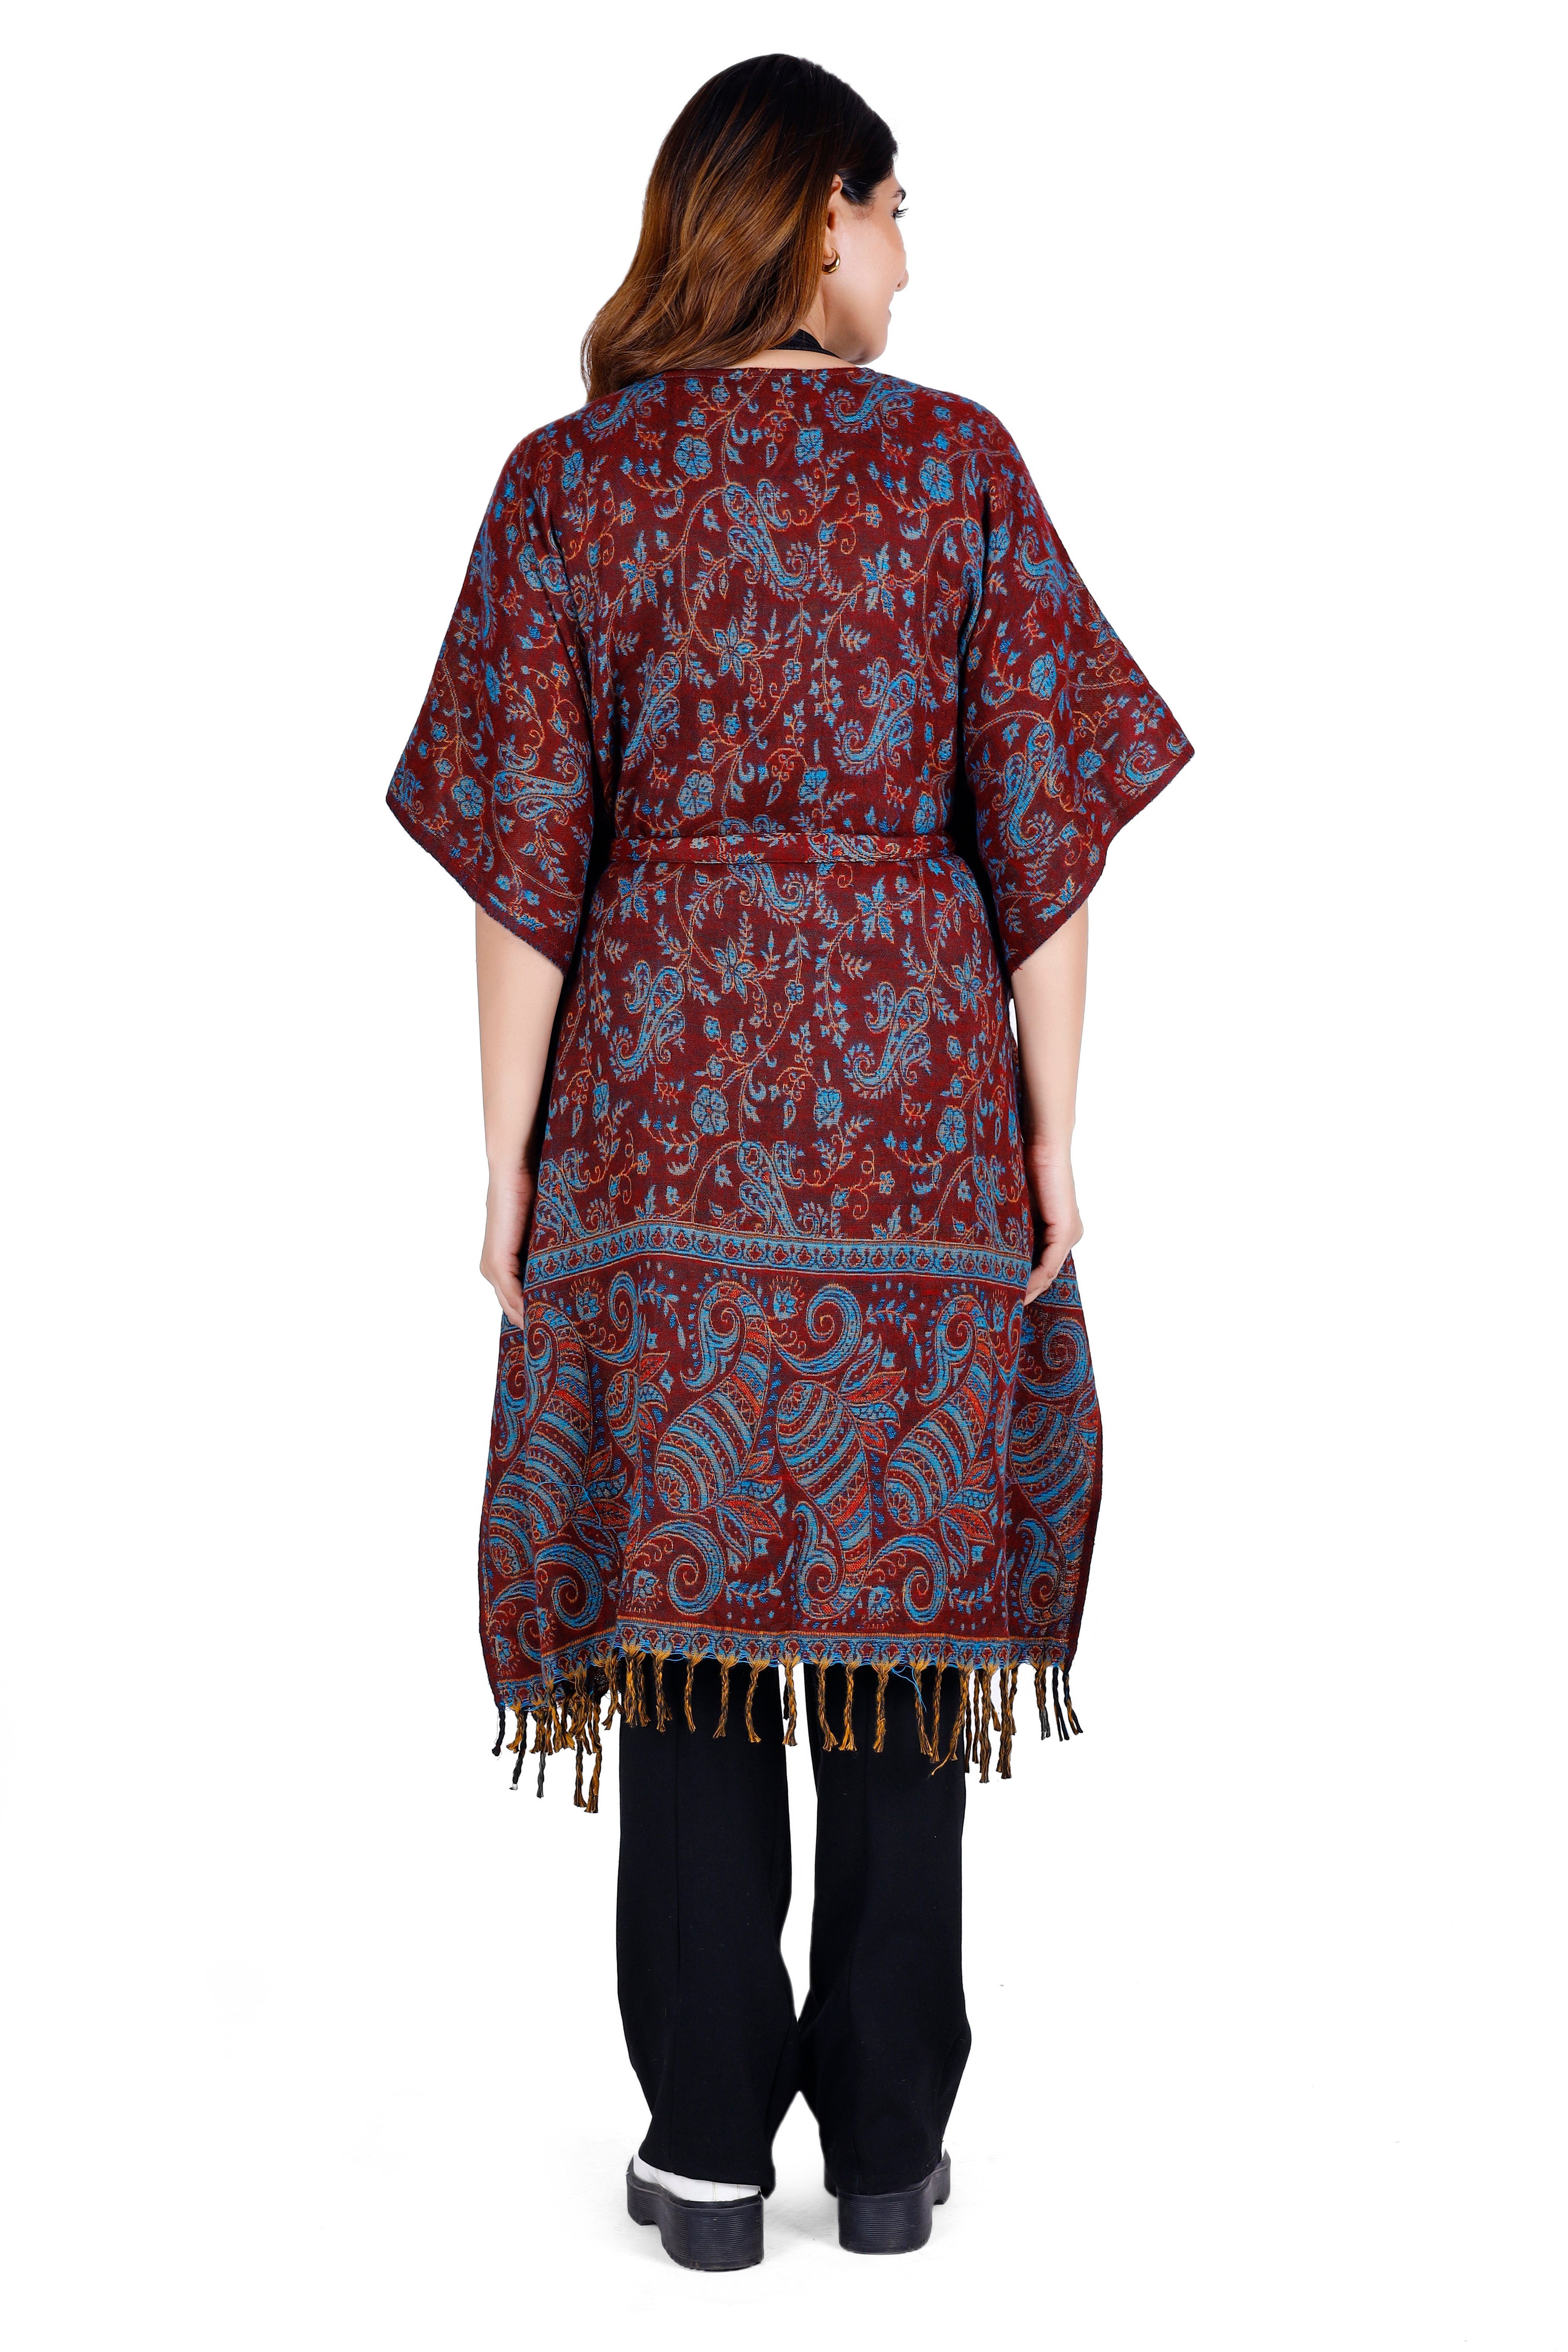 bordeauxrot/blau Kimono alternative Bekleidung Mantel, Flauschiger Kimono Guru-Shop Kaftan,.., Kimonokleid,